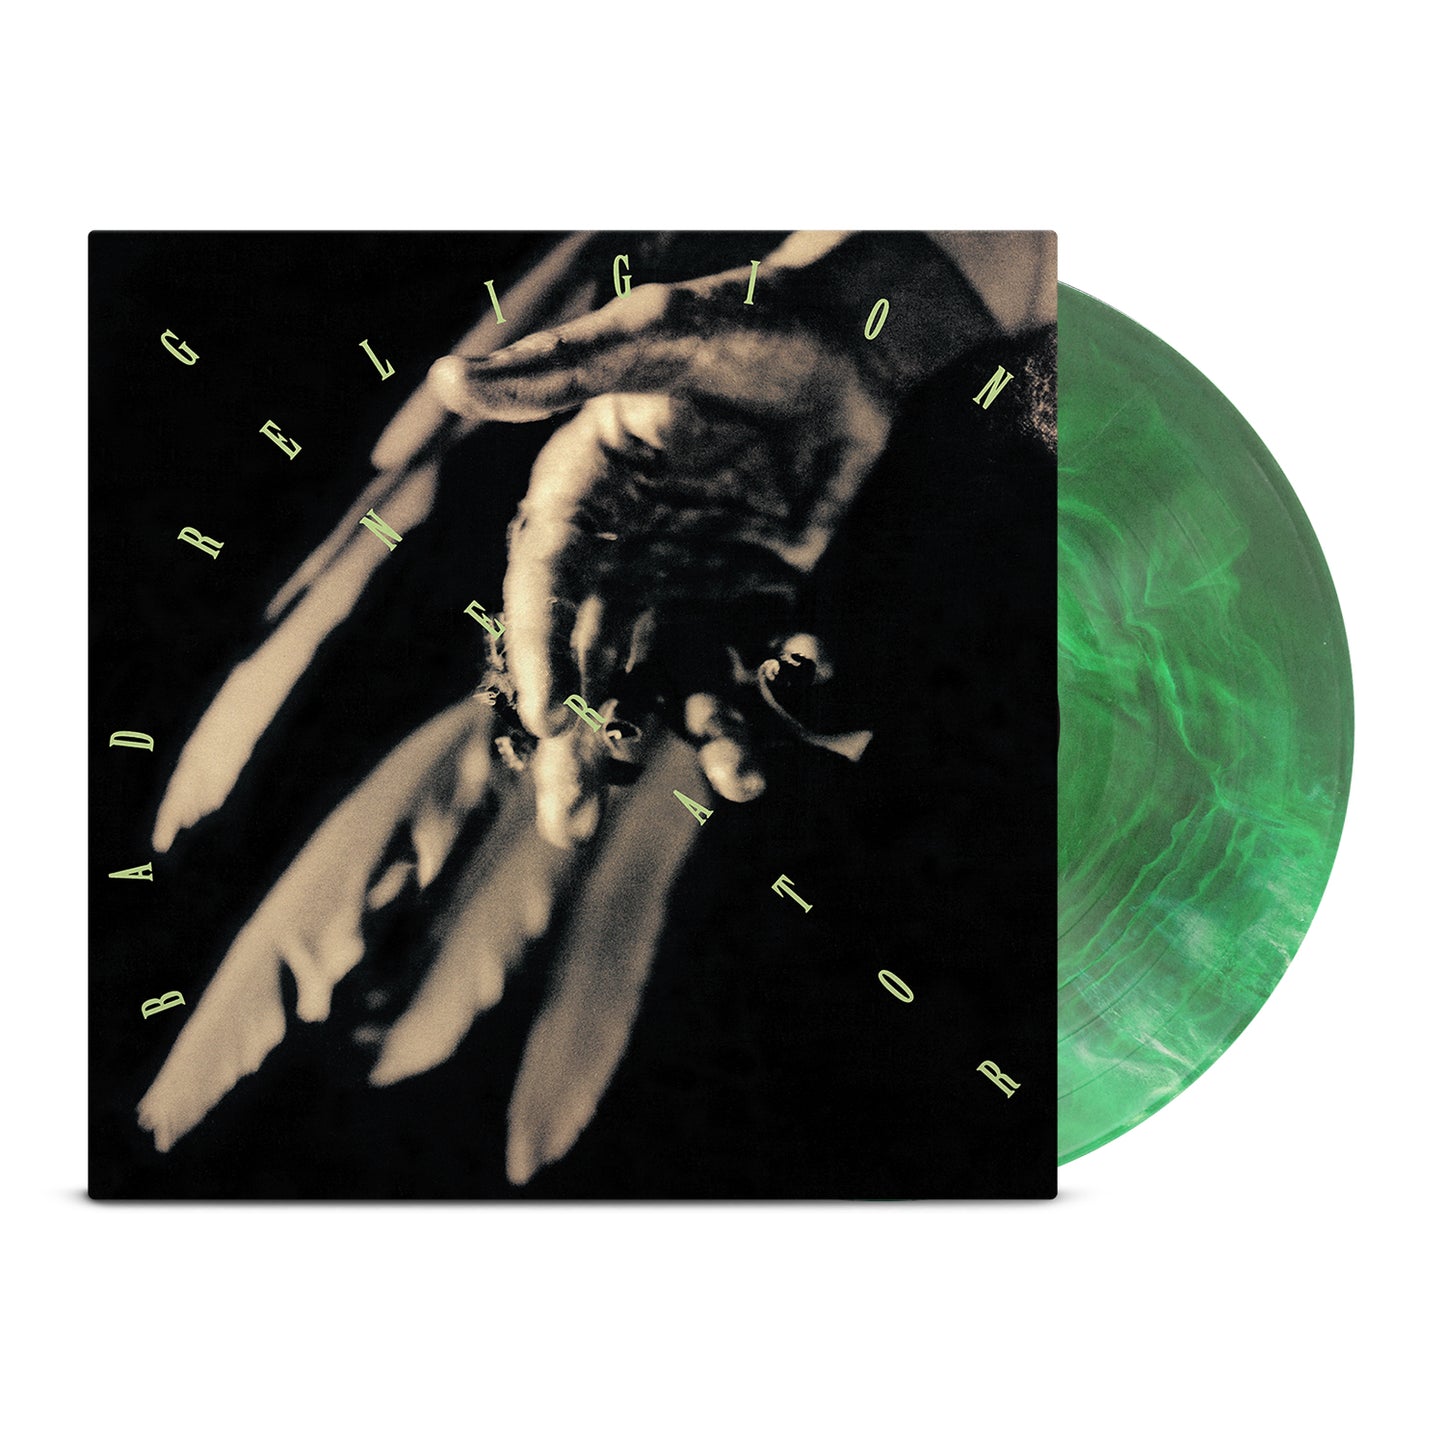 Bad Religion "Generator" LP (GREEN/CLEAR GALAXY Vinyl)